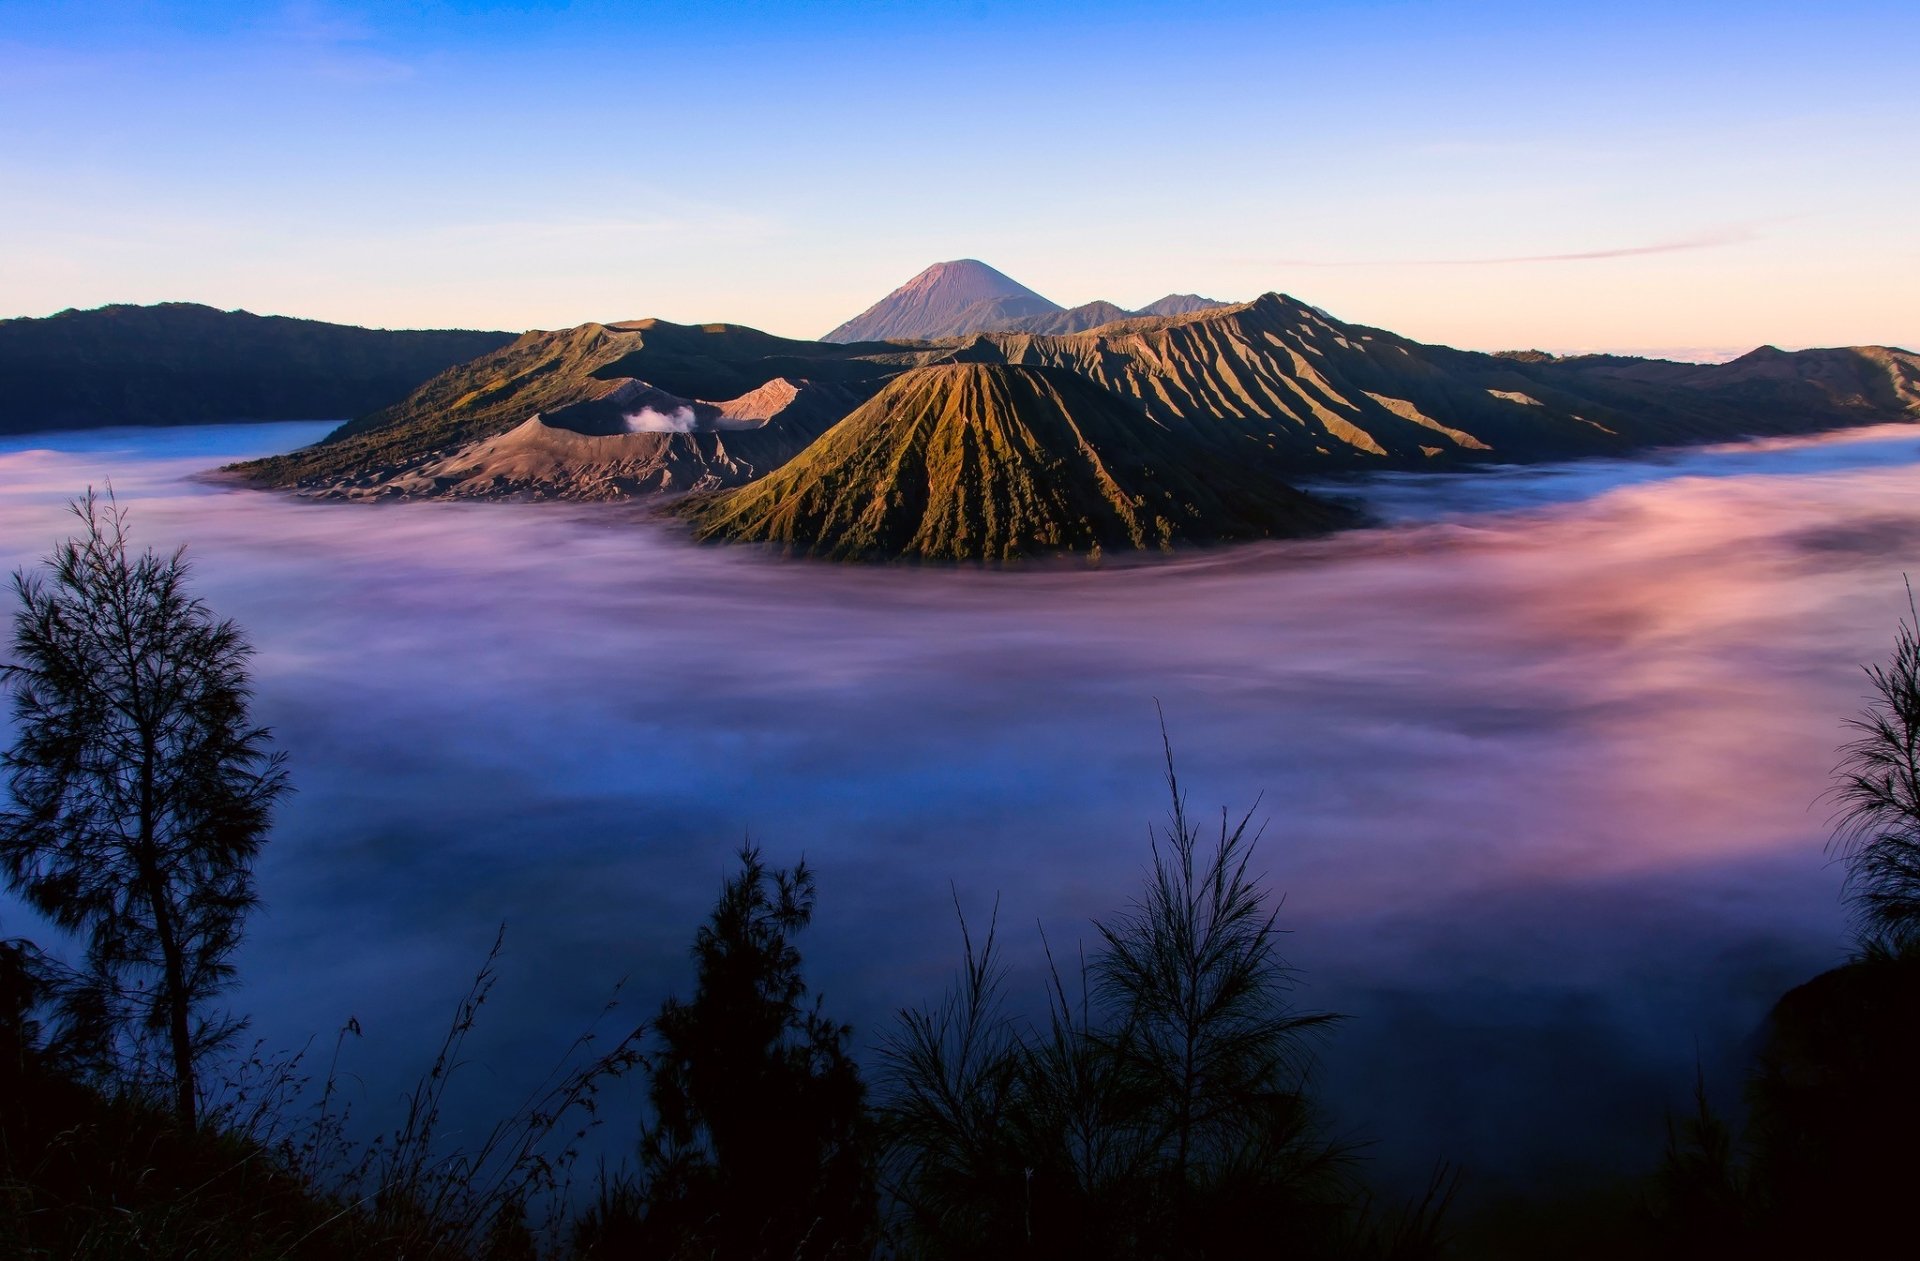 Download 62 Wallpaper Keren Gunung Paling Keren Terbaru - Mount Bromo - HD Wallpaper 